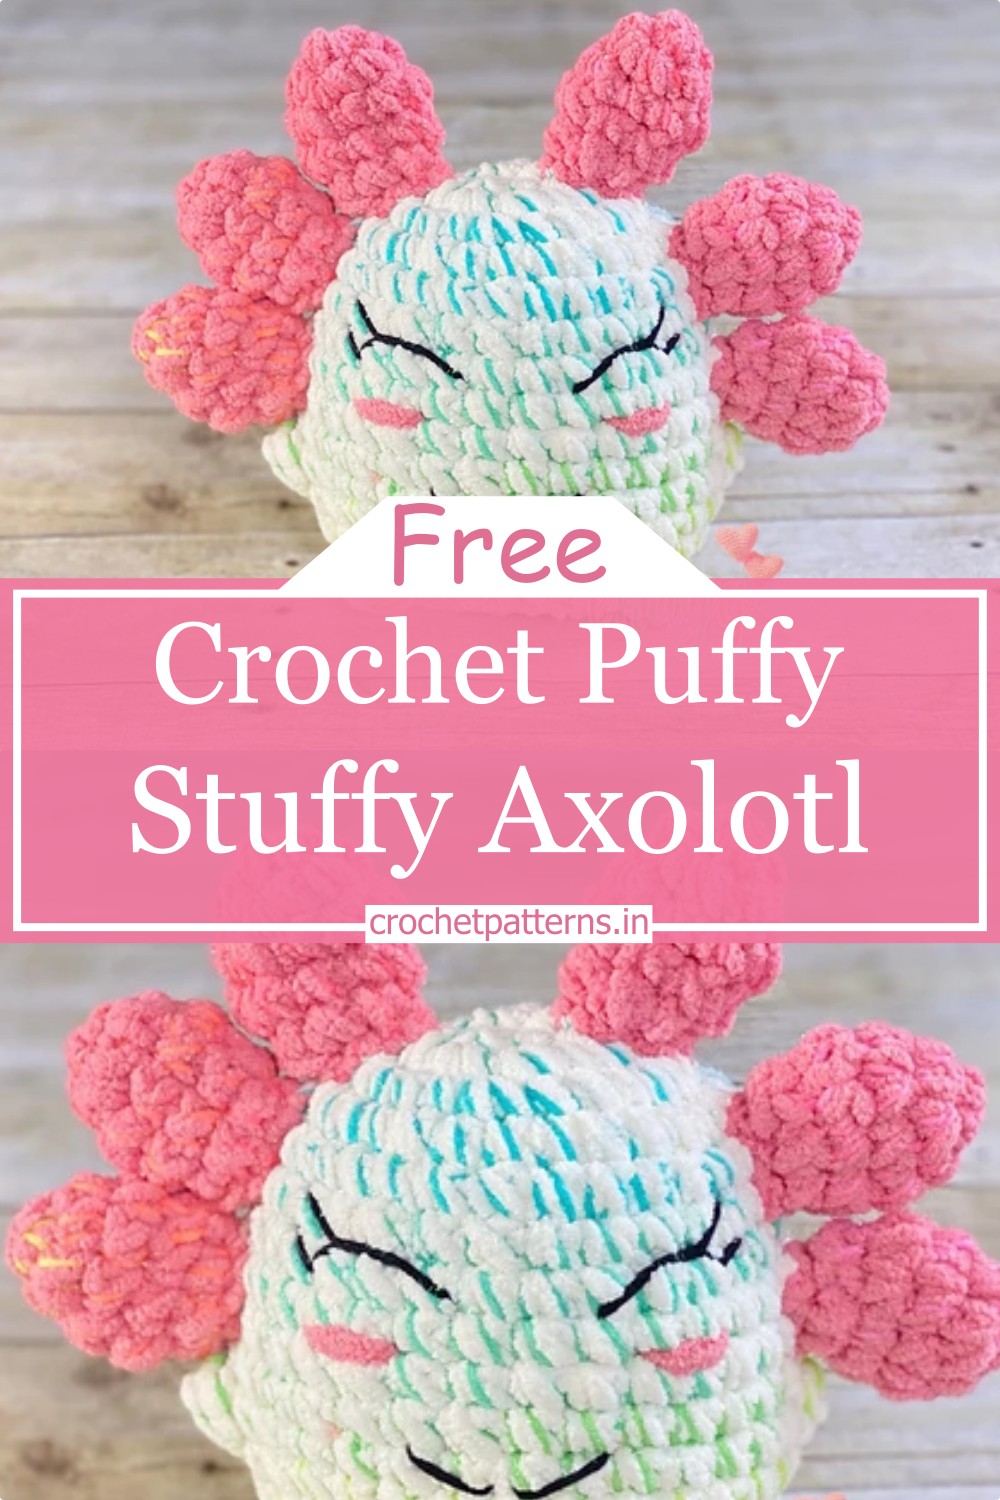 Puffy Stuffy Axolotl